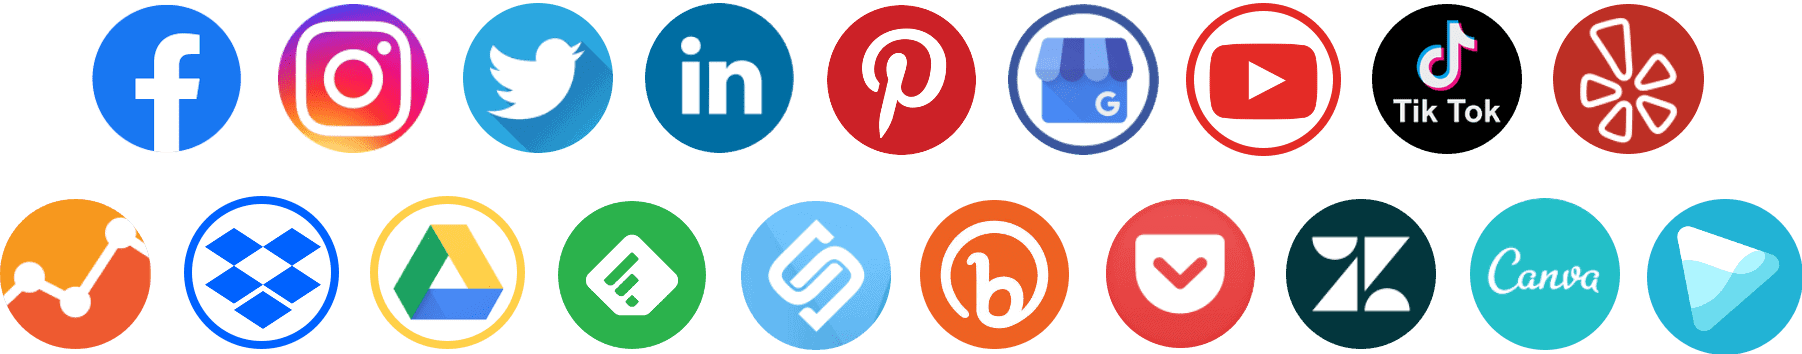 social media round icons